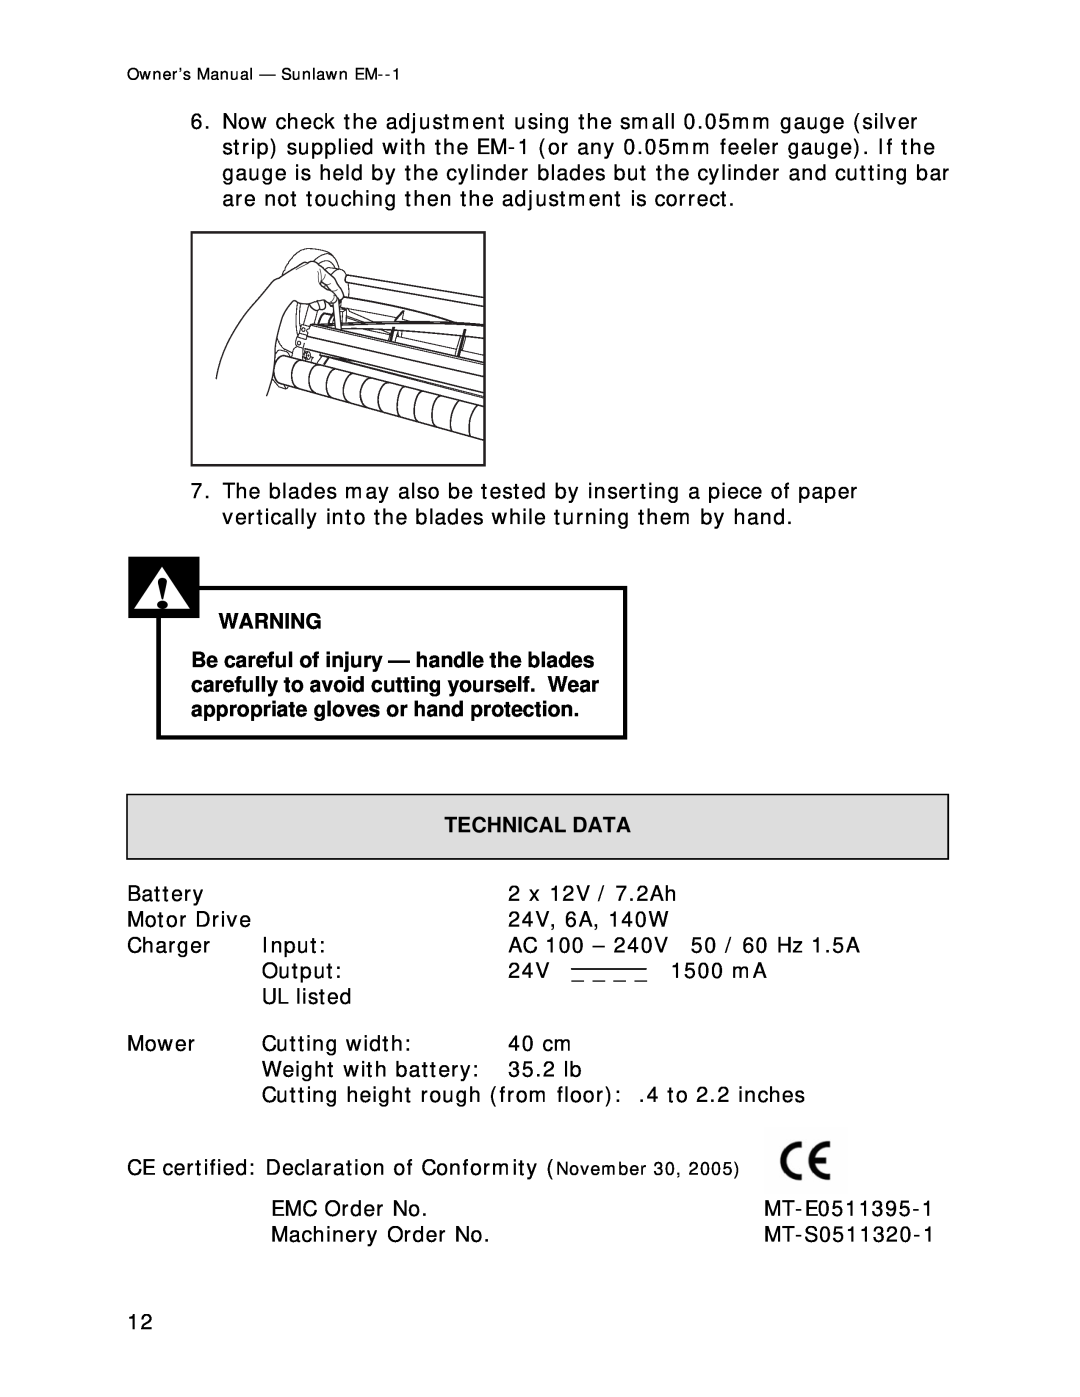 Sun Lawn EM-1 owner manual Technical Data 